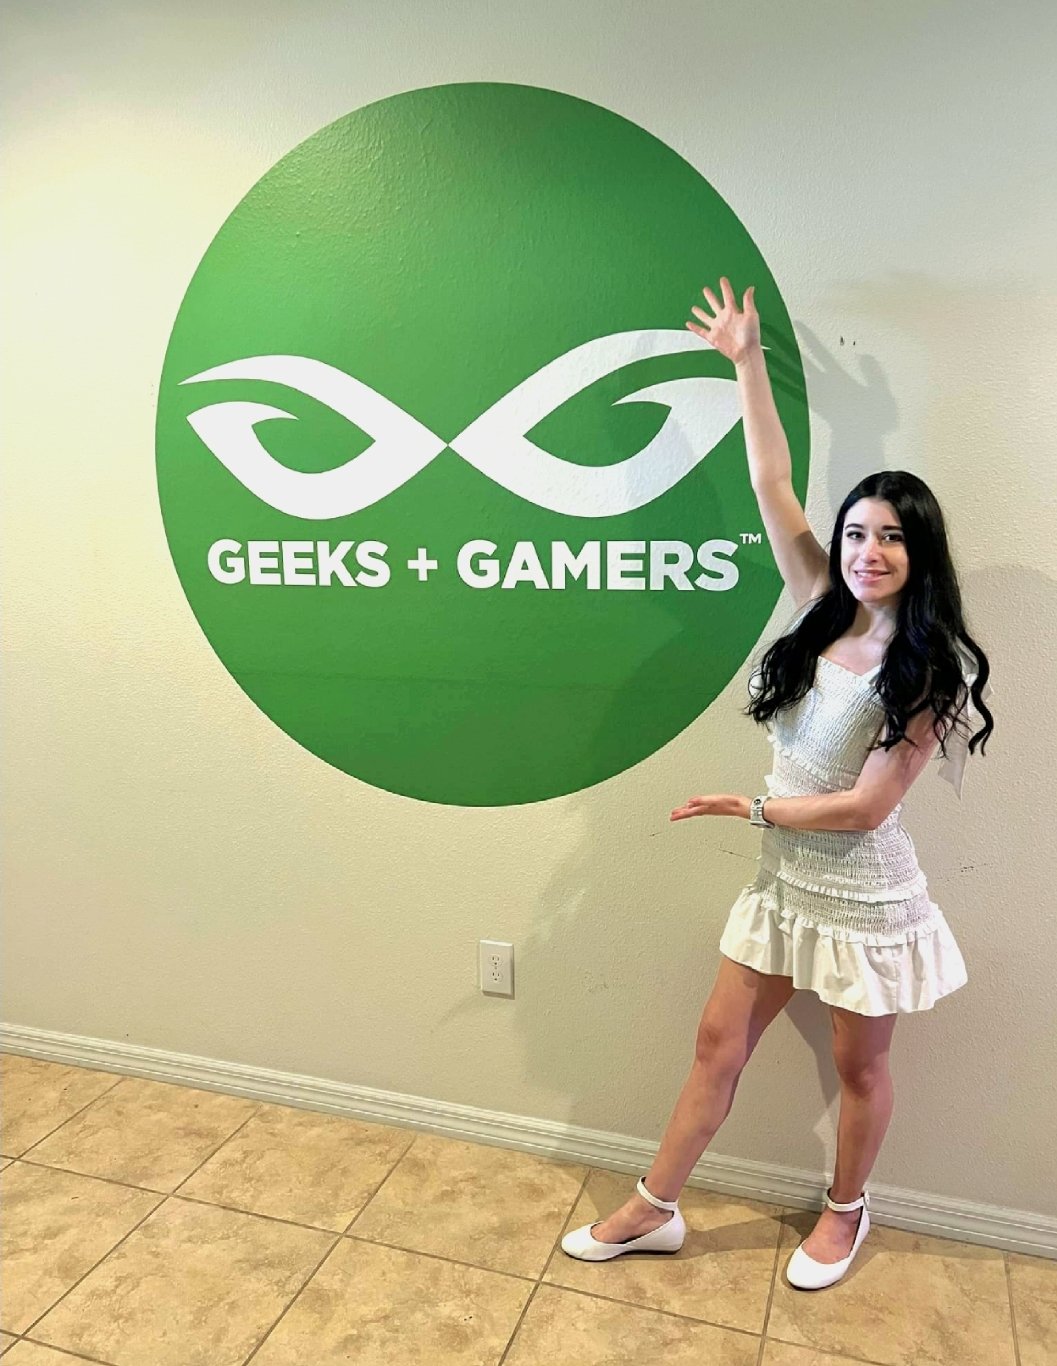 Geeks + Gamers Girl Fo85oEKWIAIZinr.jpeg